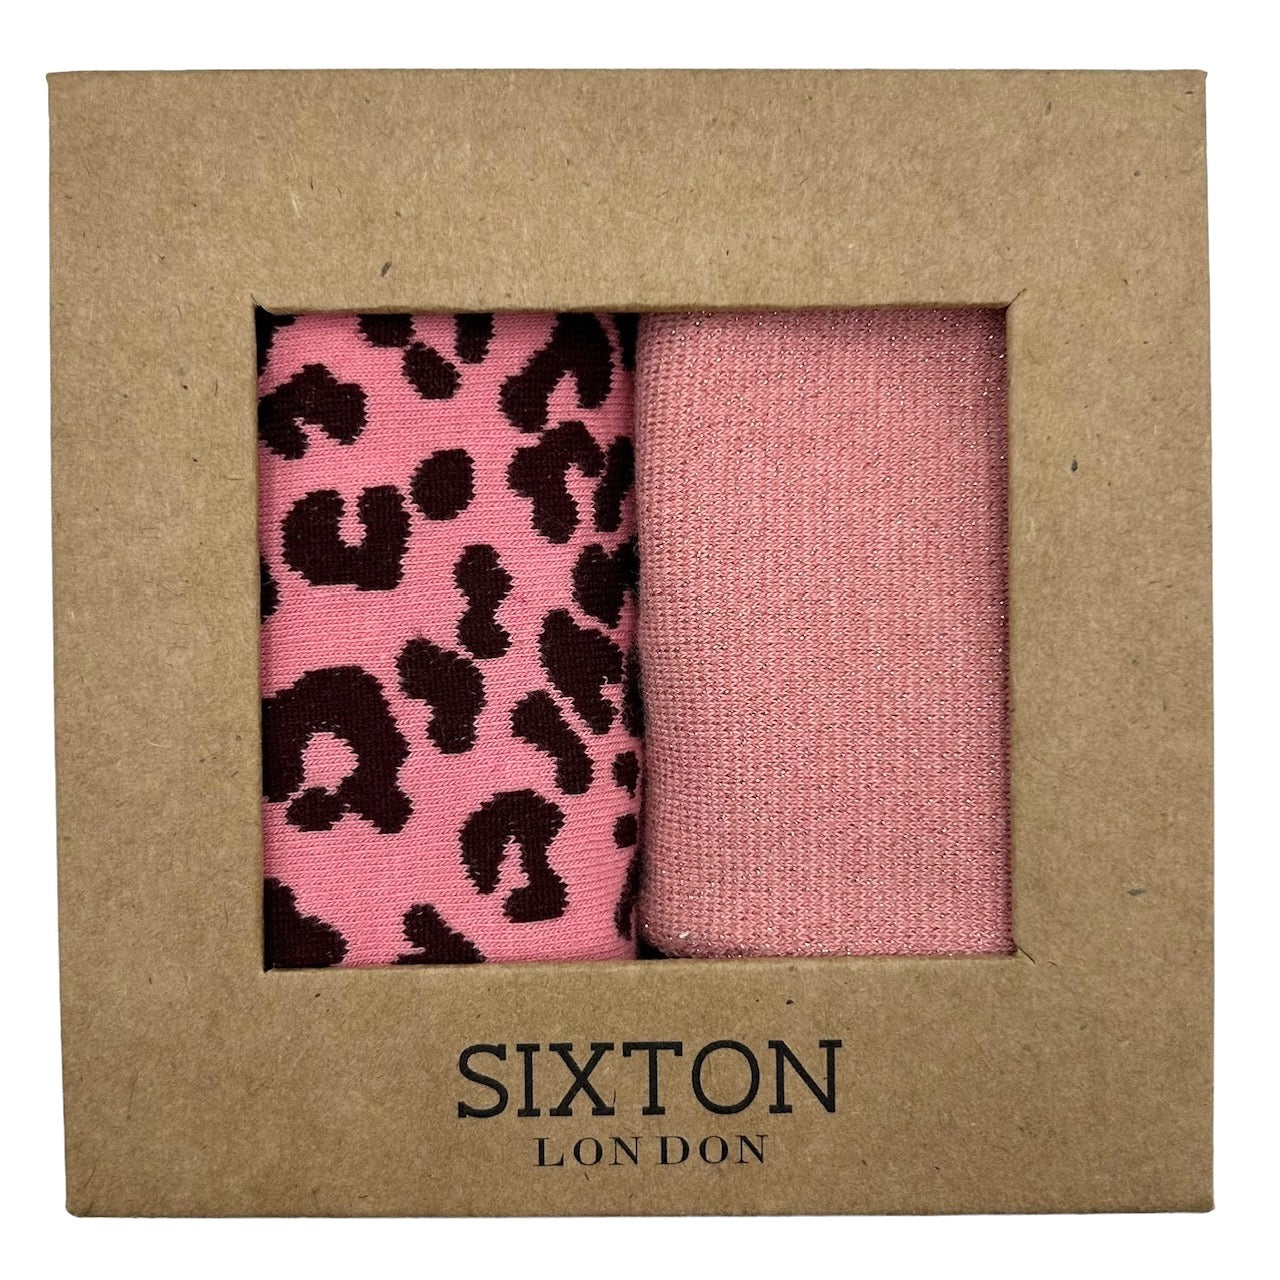 Pink mix duo sock box